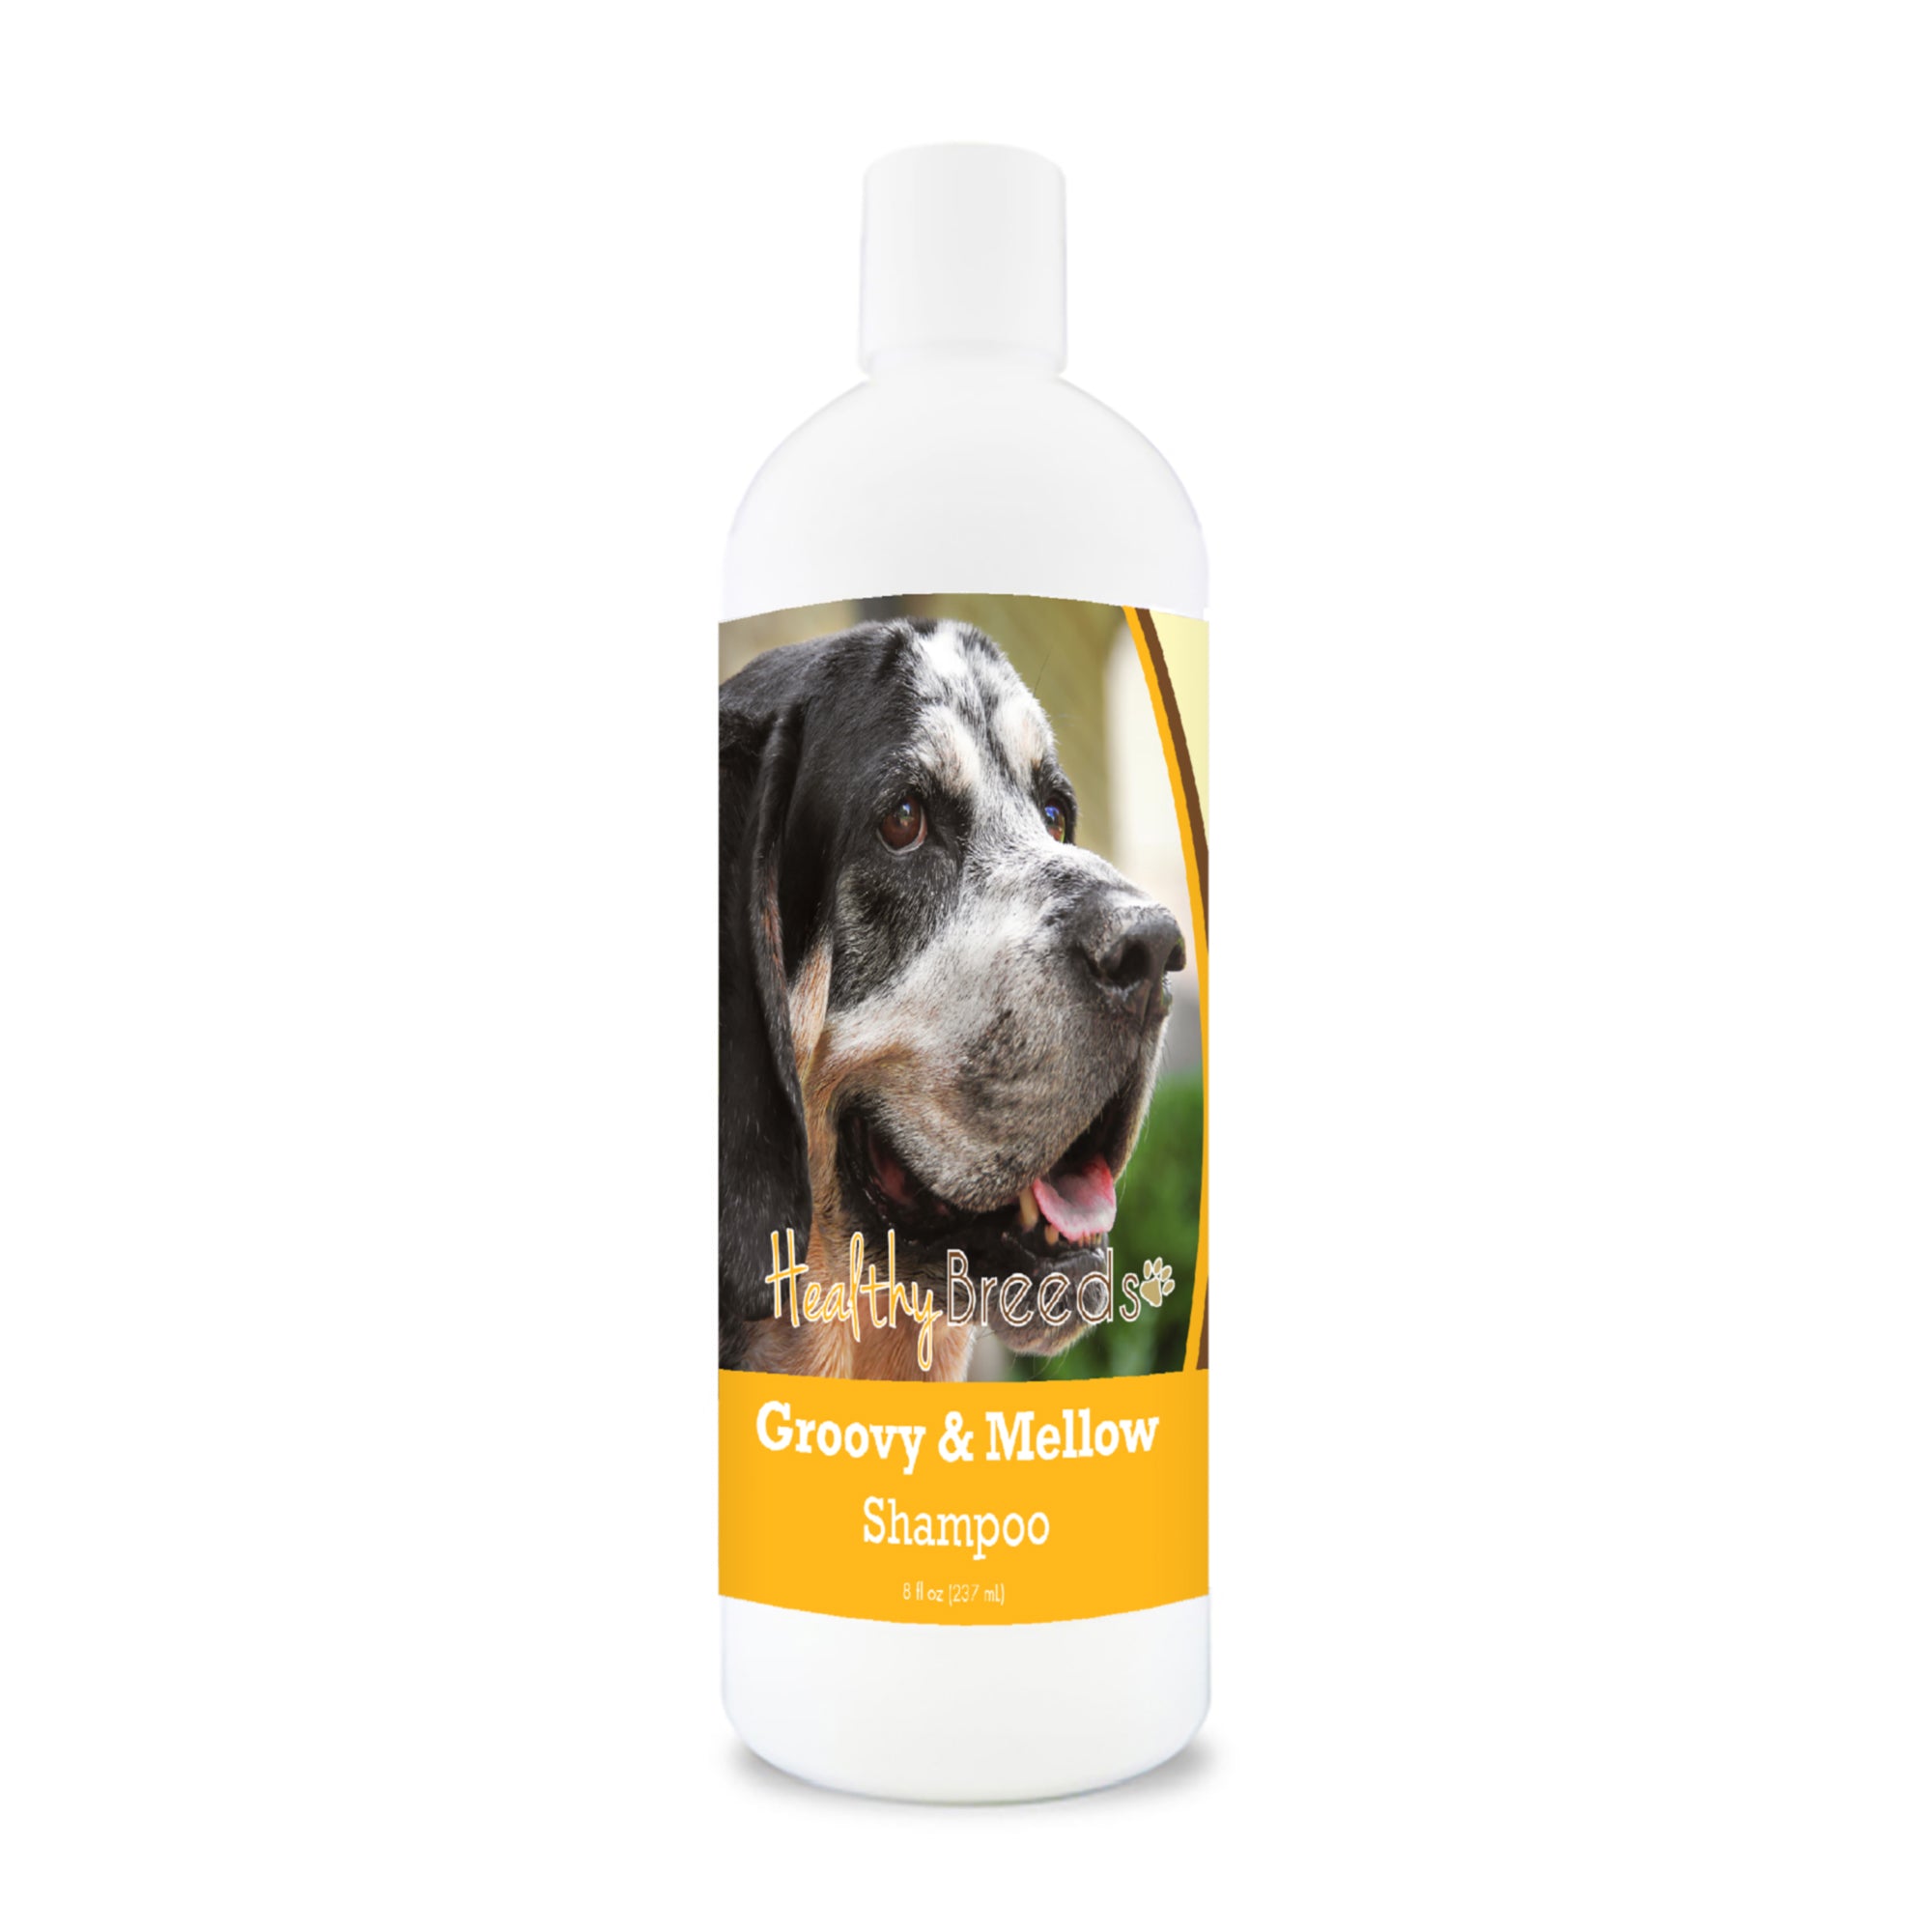 Bluetick Coonhound Groovy & Mellow Shampoo 8 oz